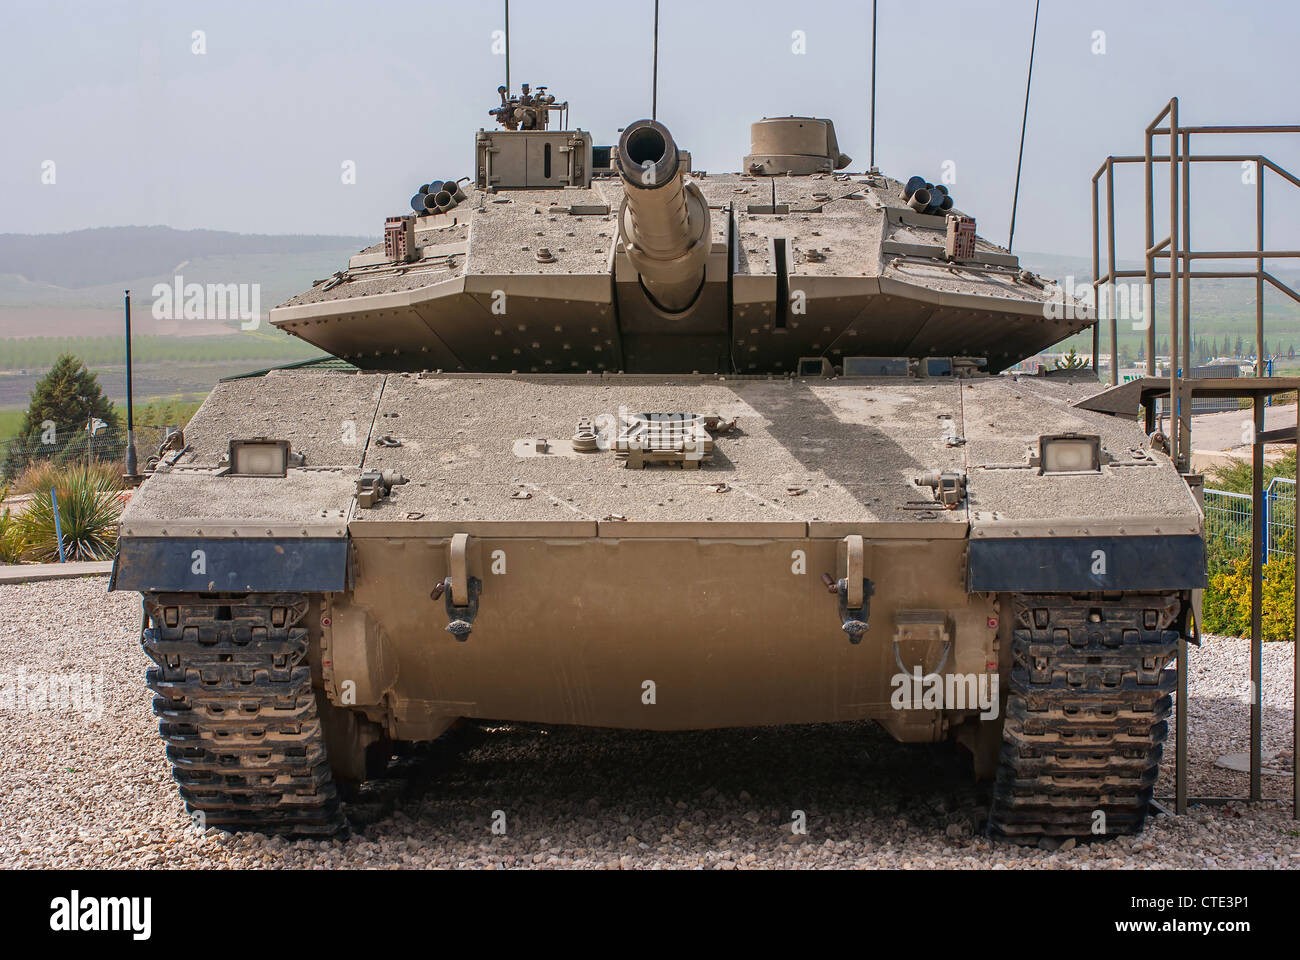 Israeli Merkava Mark IV tank in Latrun Armored Corps museum, Israel Stock Photo